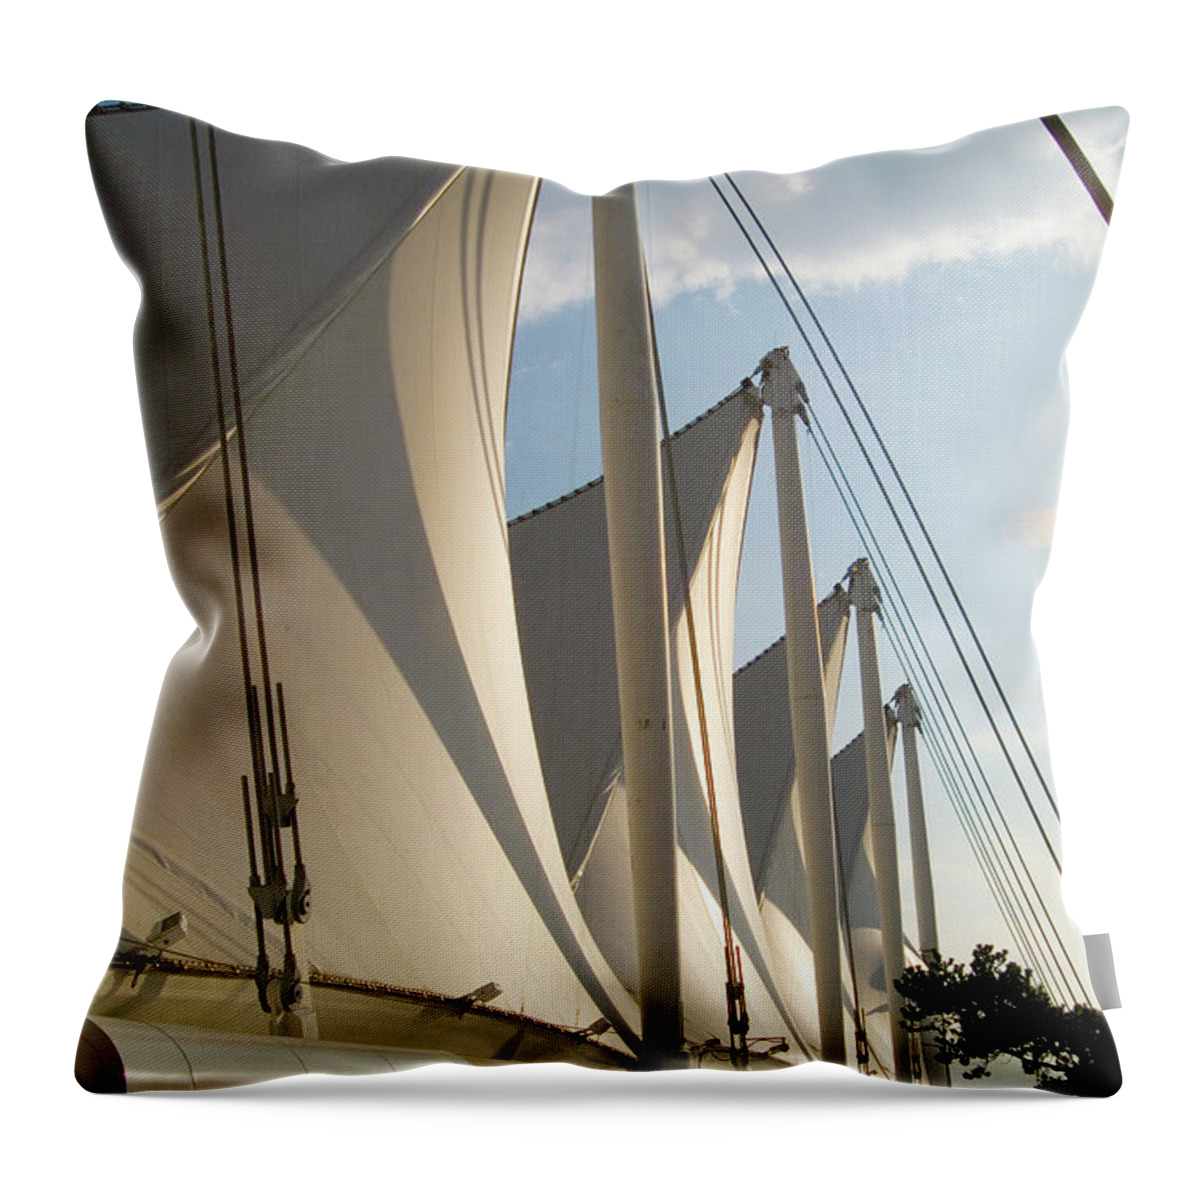 Estock Throw Pillow featuring the digital art Cruise Ship Terminal In Canada by J.b. Grant